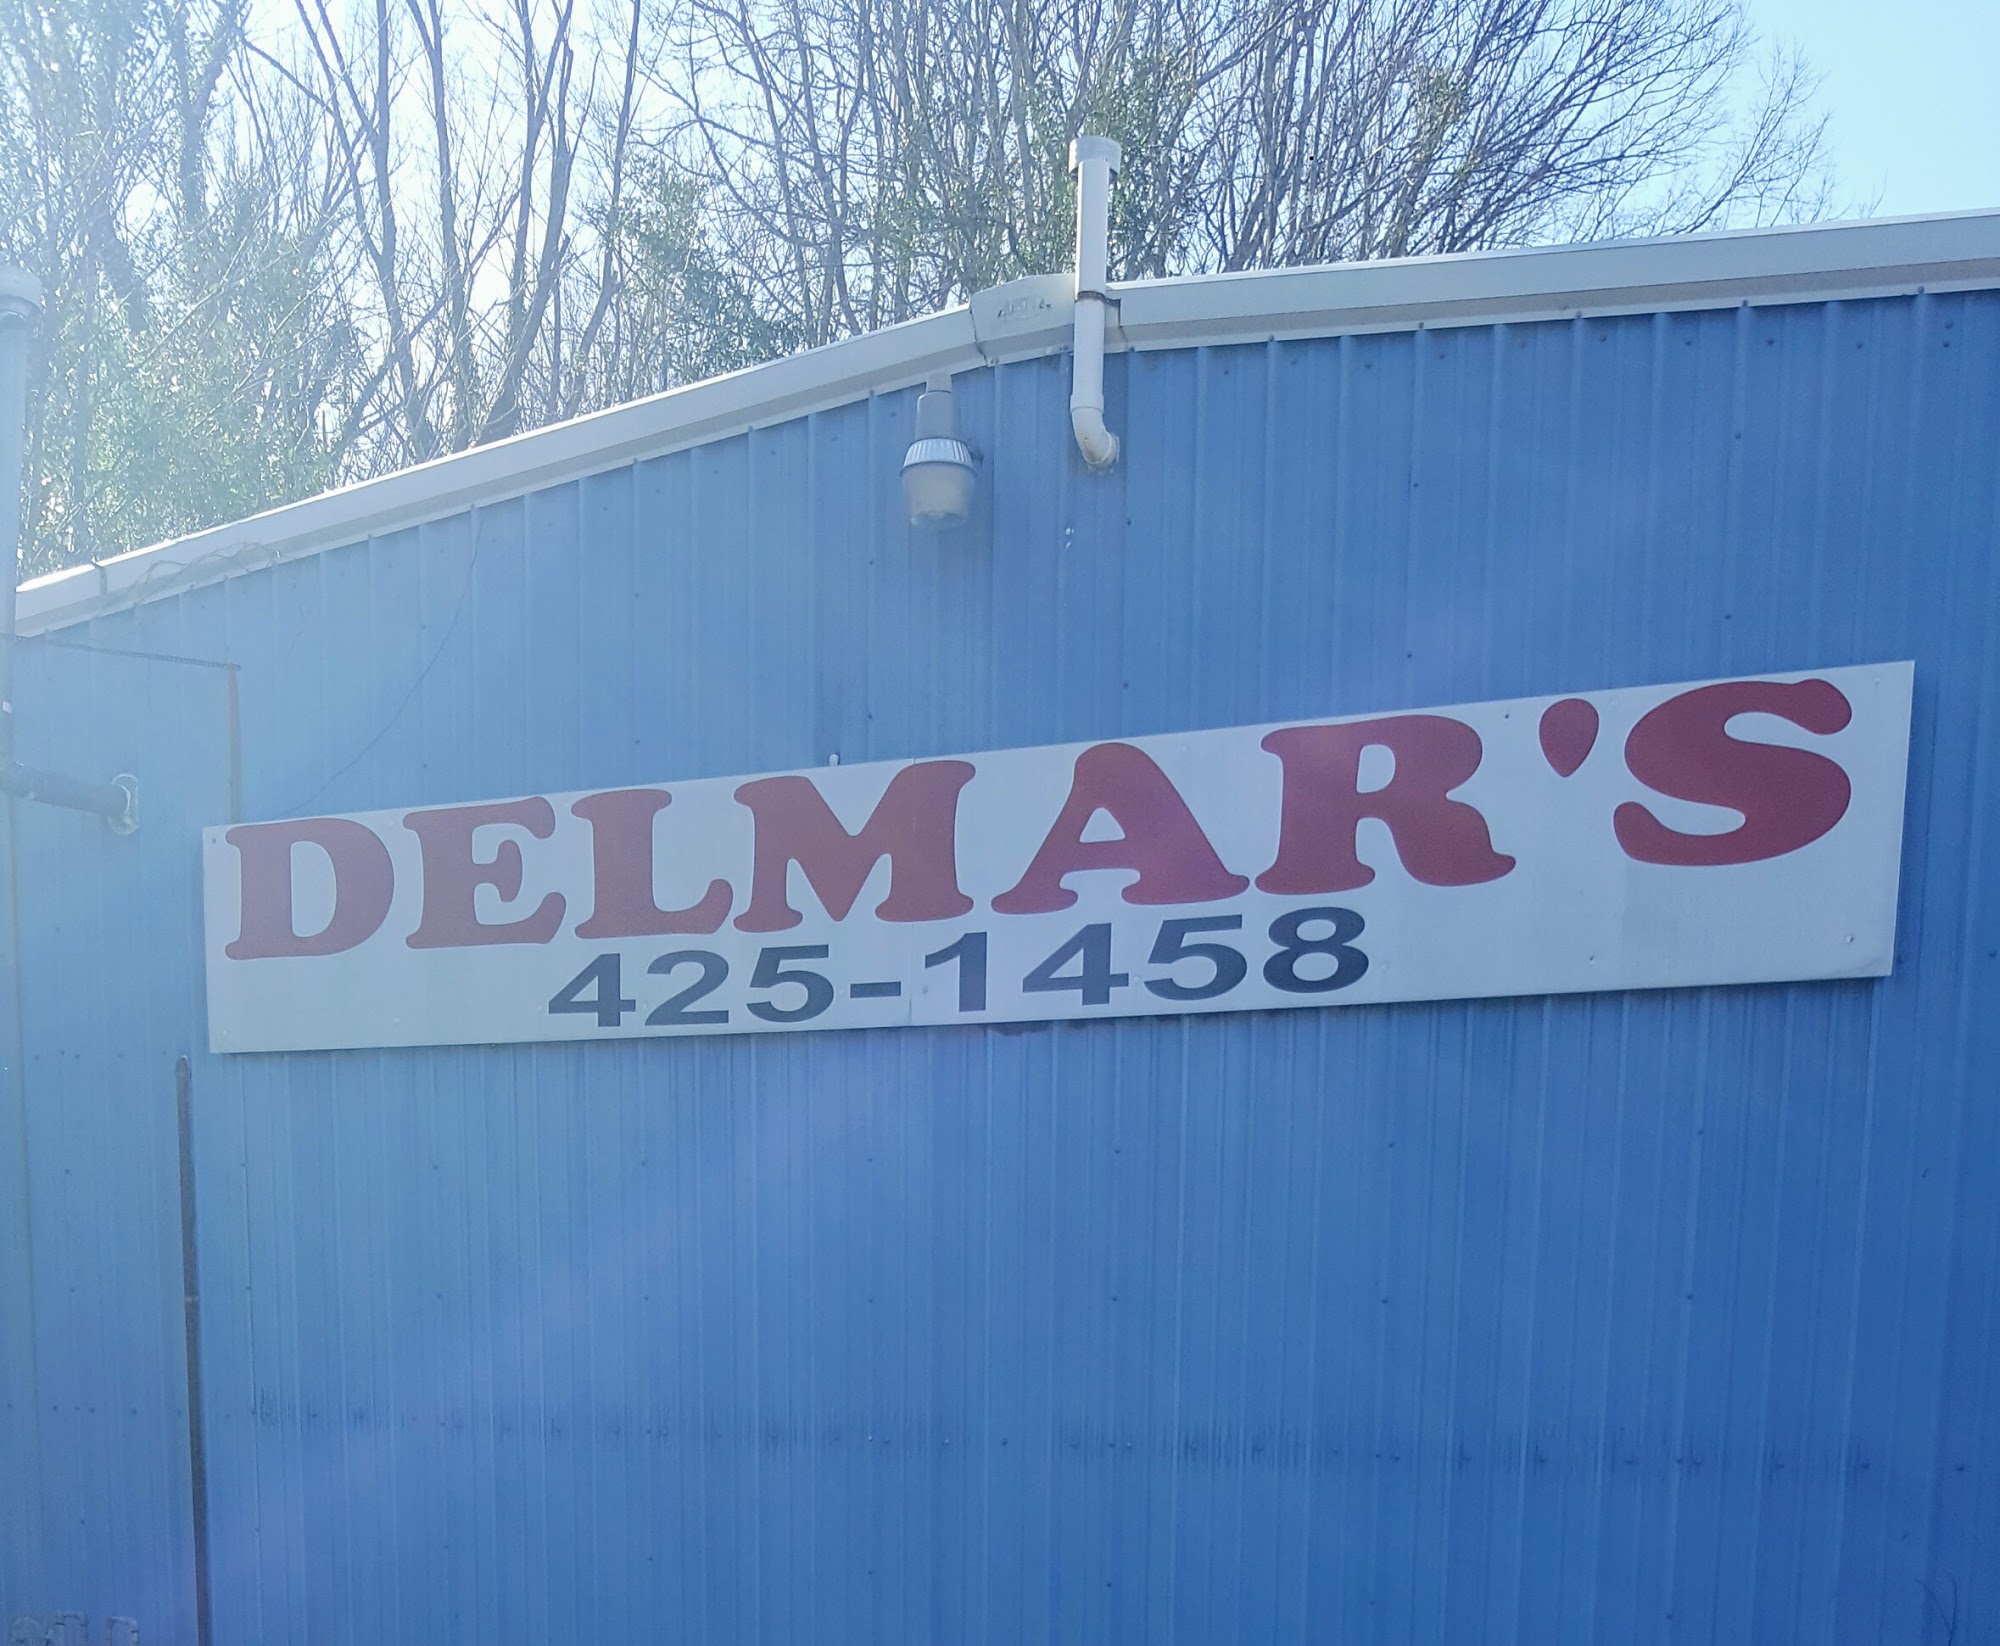 Delmar's Garage